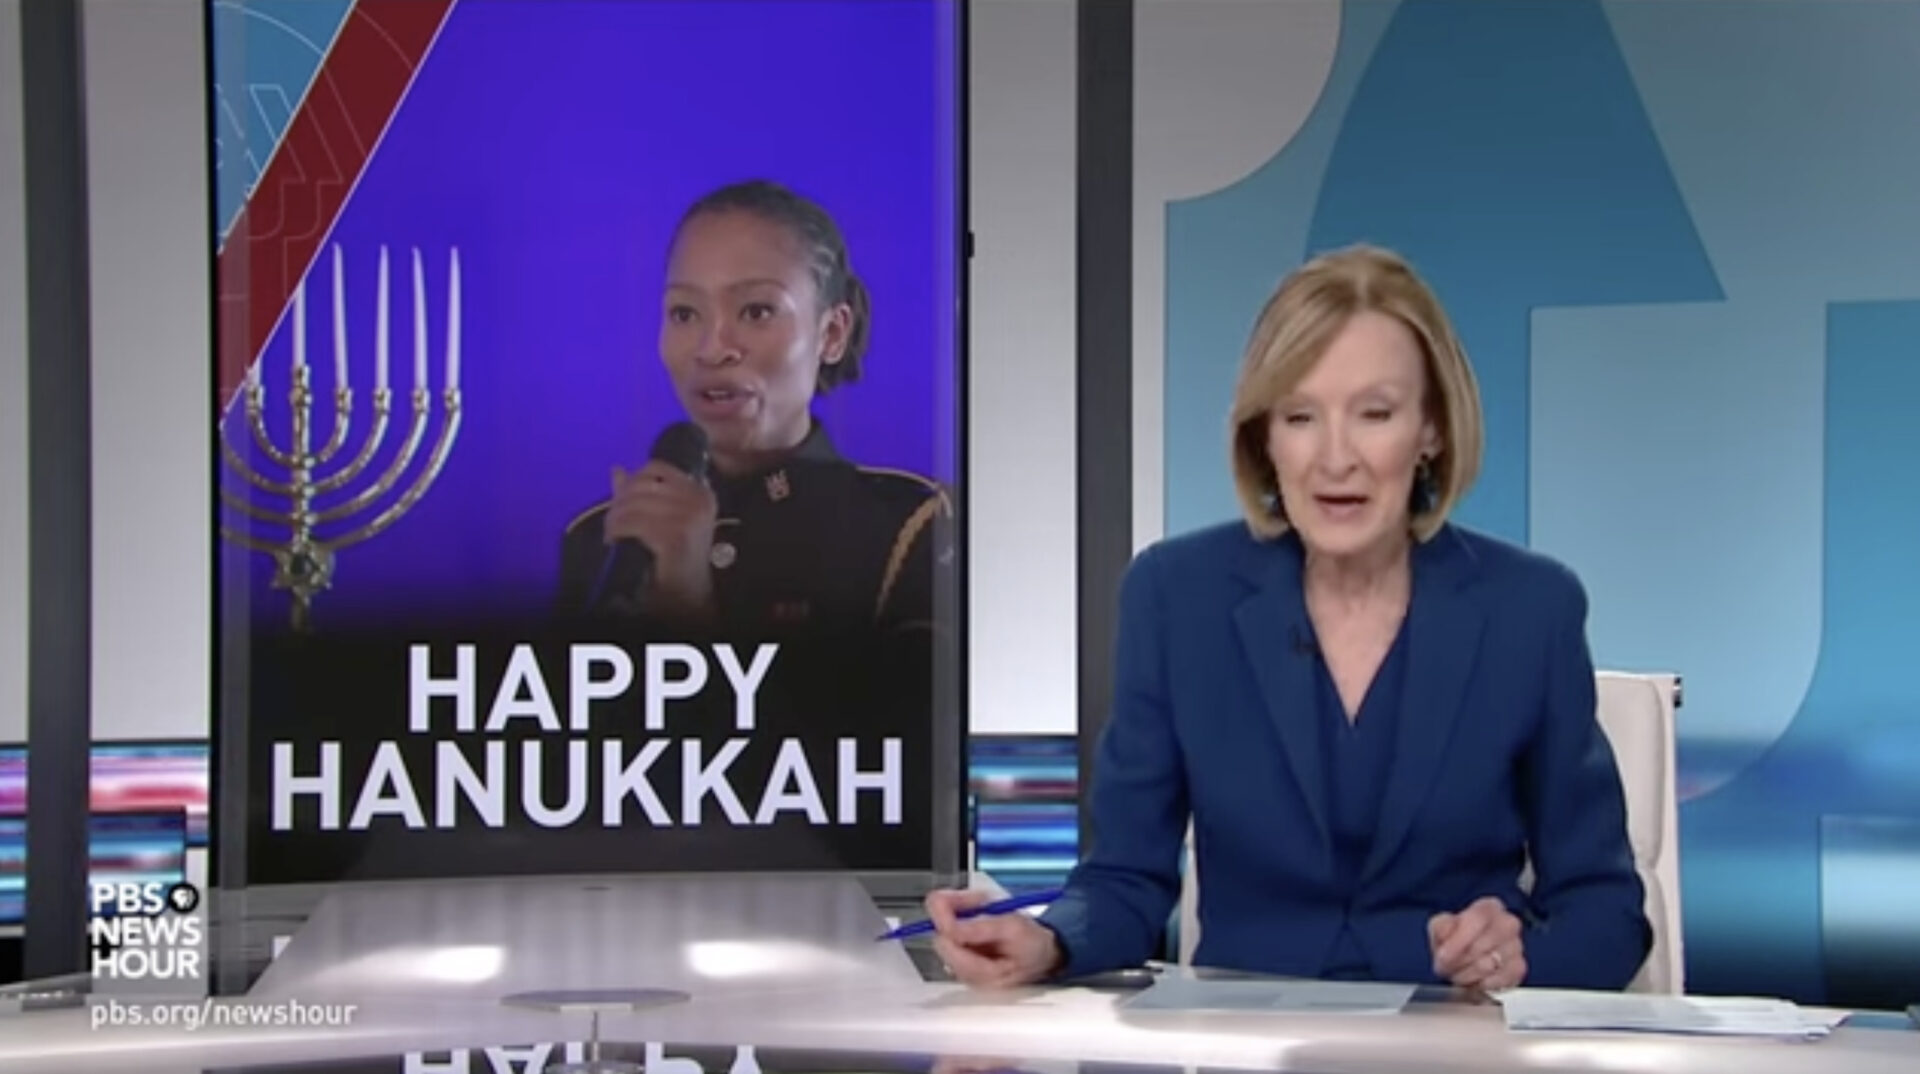 Armed forces members celebrate Hanukkah through song